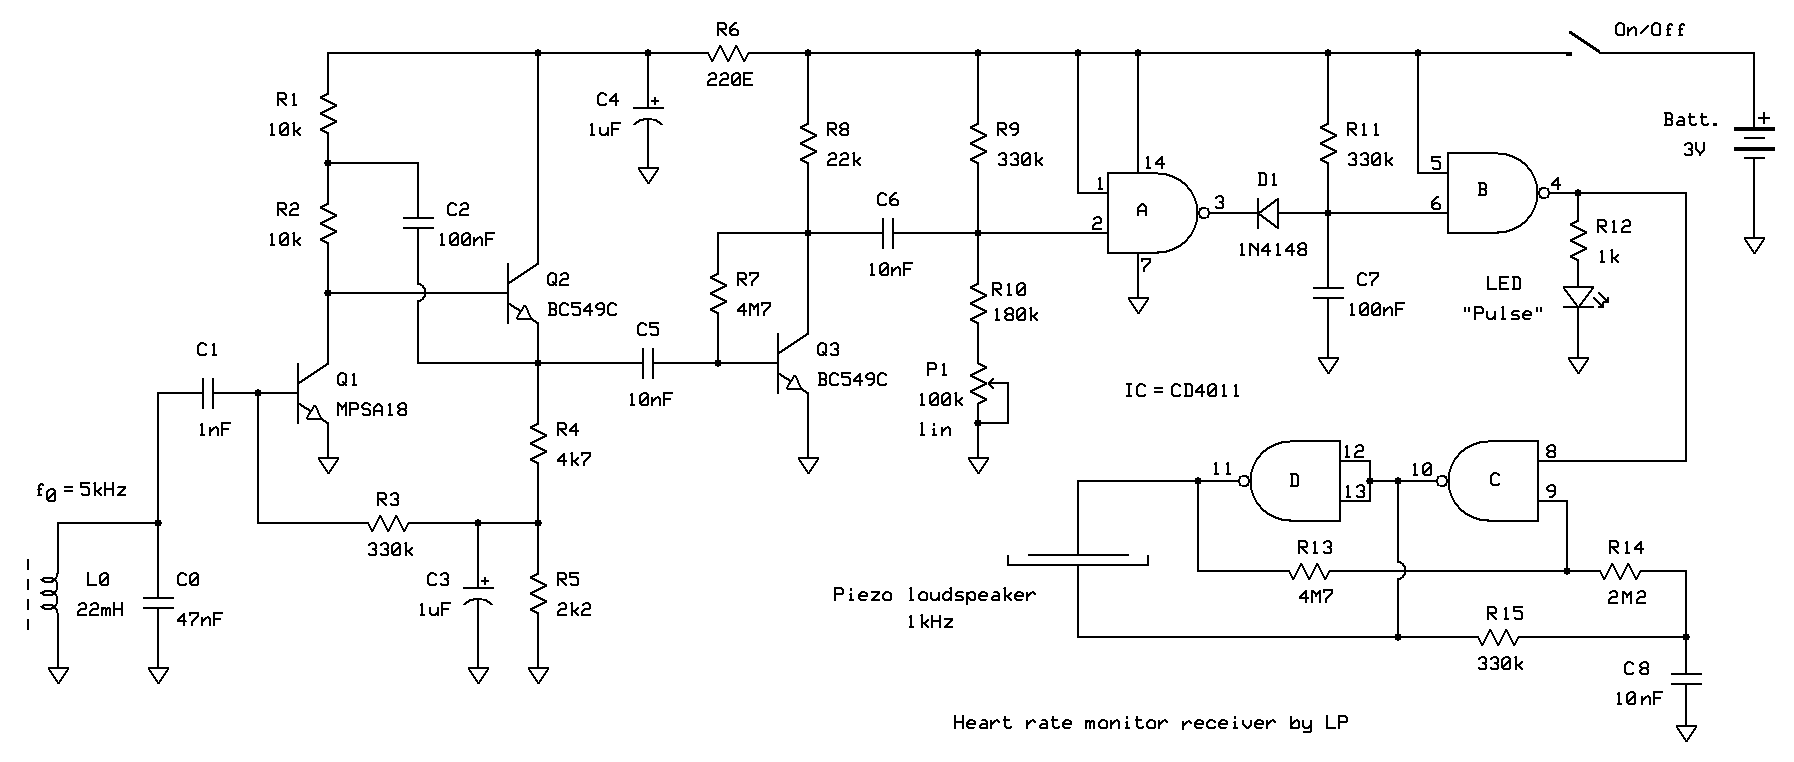 H-R monitor receiver by LP circuit diagram